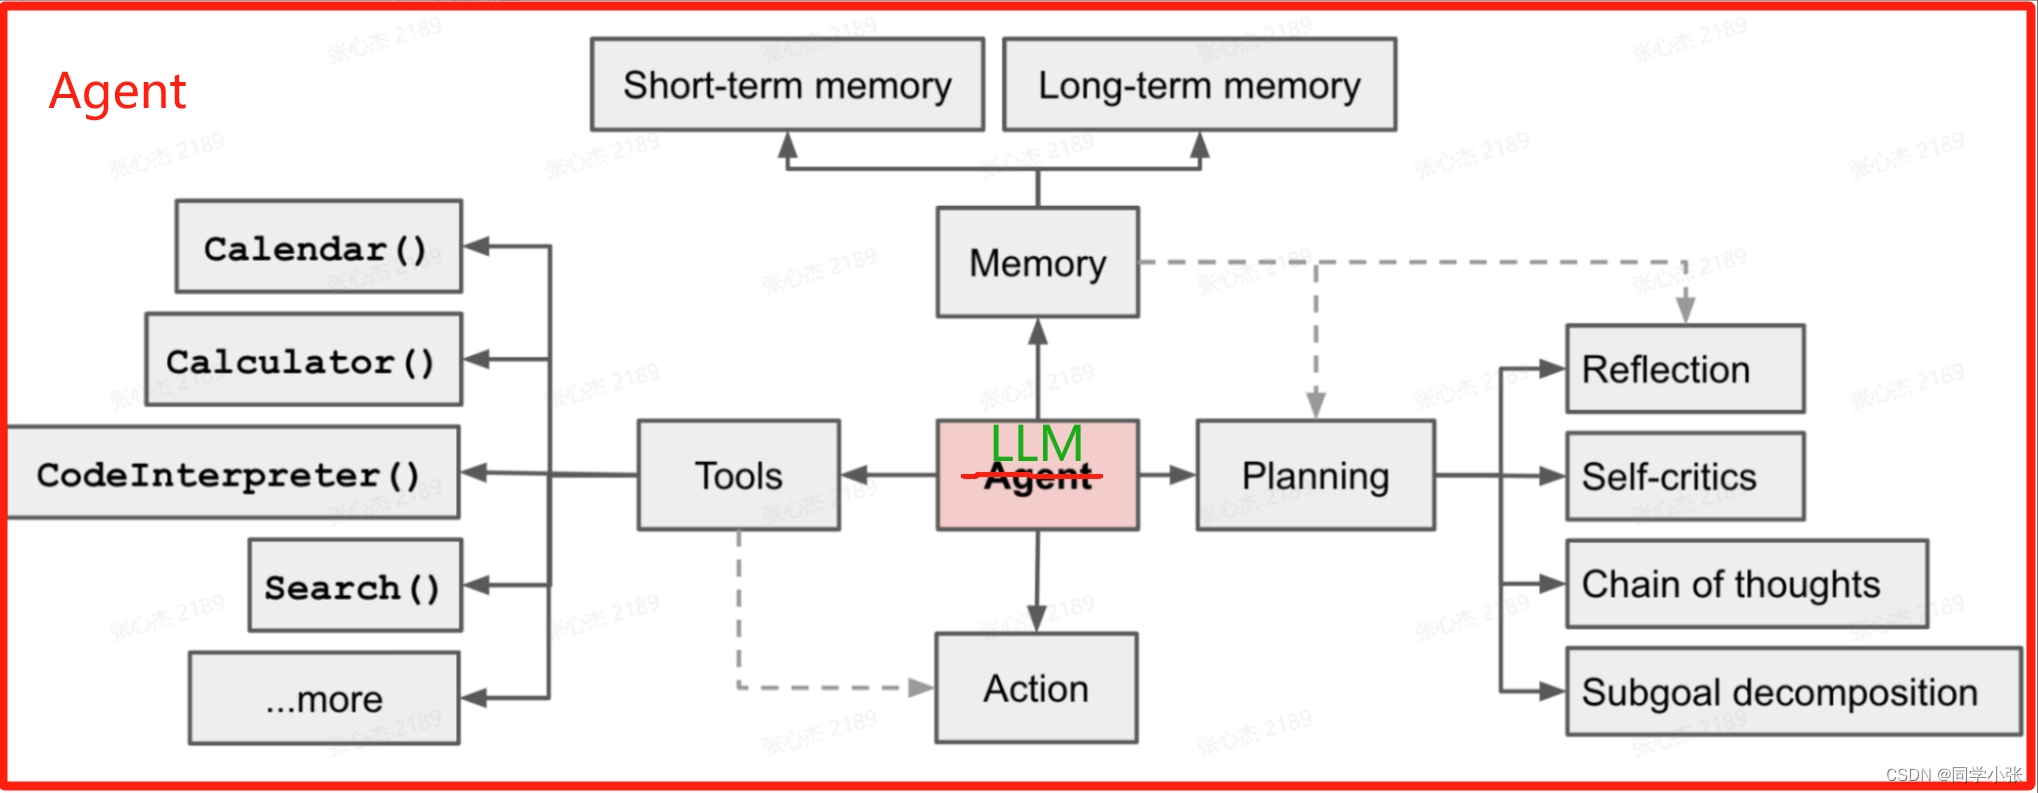 【AI Agent系列】【MetaGPT多智能体学习】1. 再理解 AI Agent - 经典案例和热门框架综述